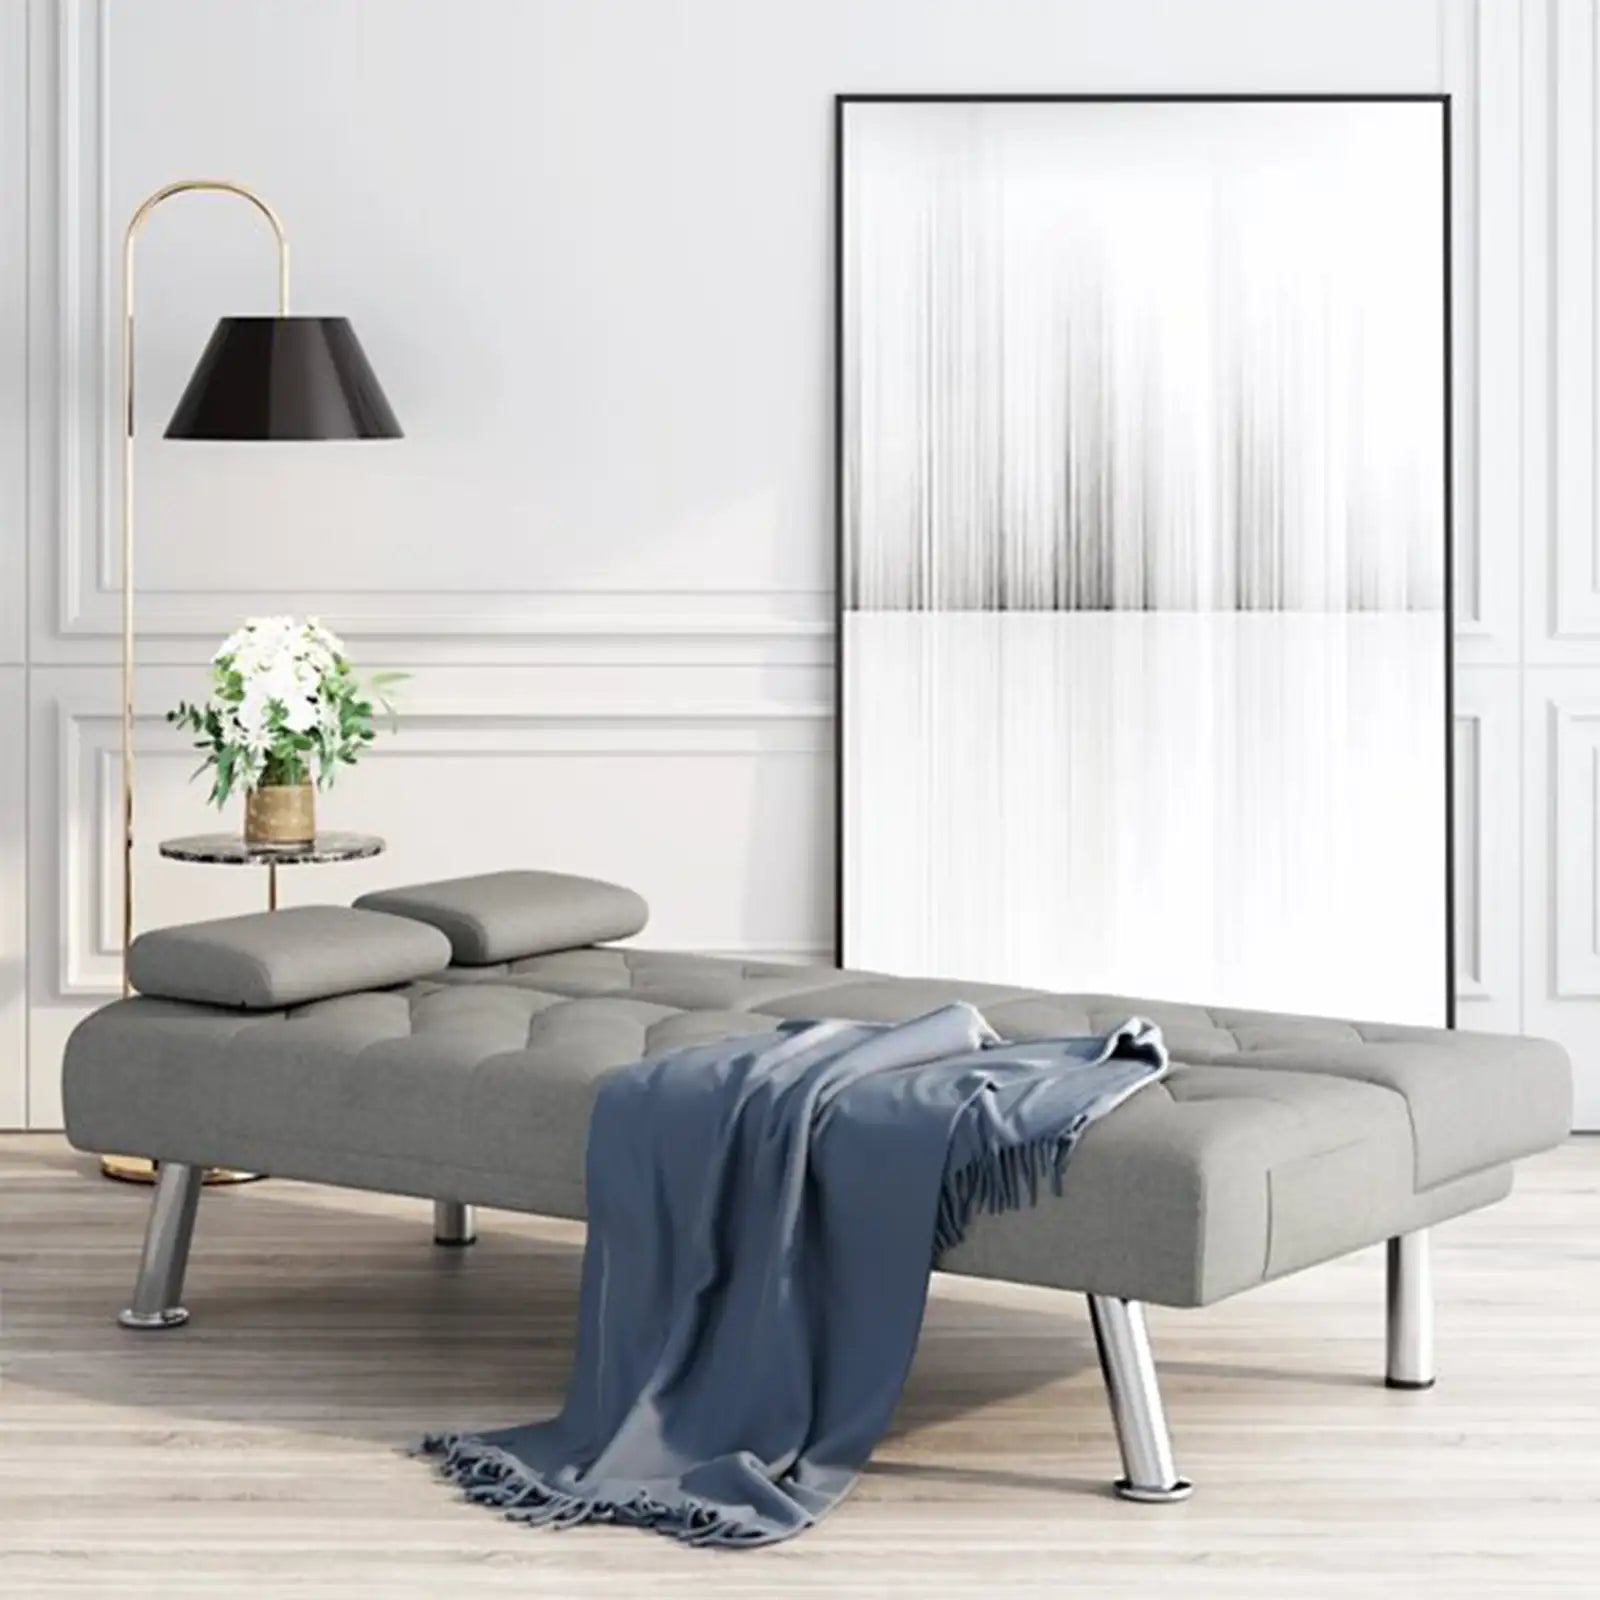 Sofá cama plegable tapizado con reposabrazos extraíbles, sofá para espacios pequeños